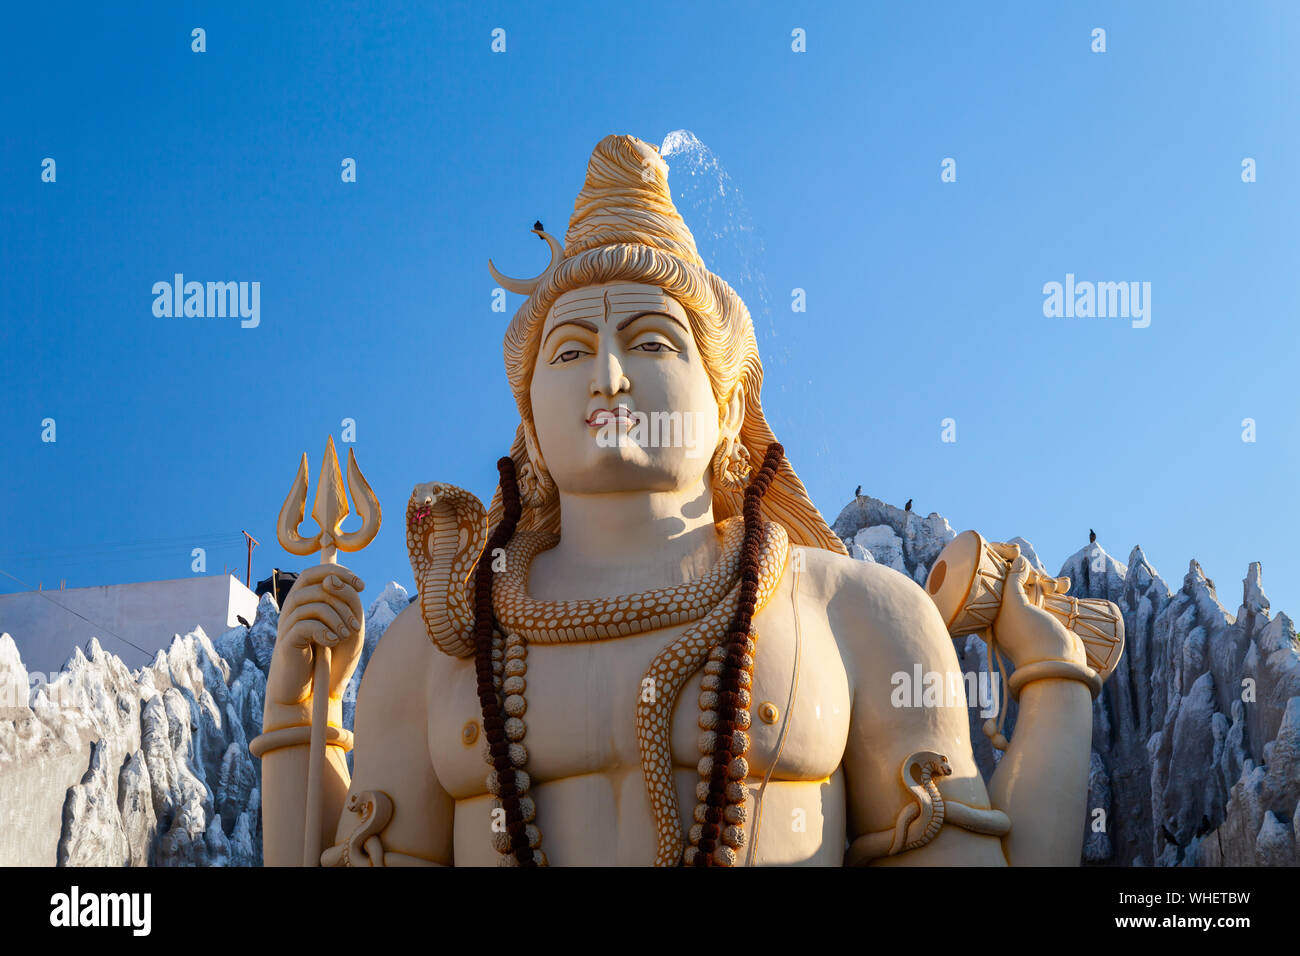 Lord Shiva statue at the Shivoham Shiva Temple, located in Bangalore city in Karnataka, India Stock Photo